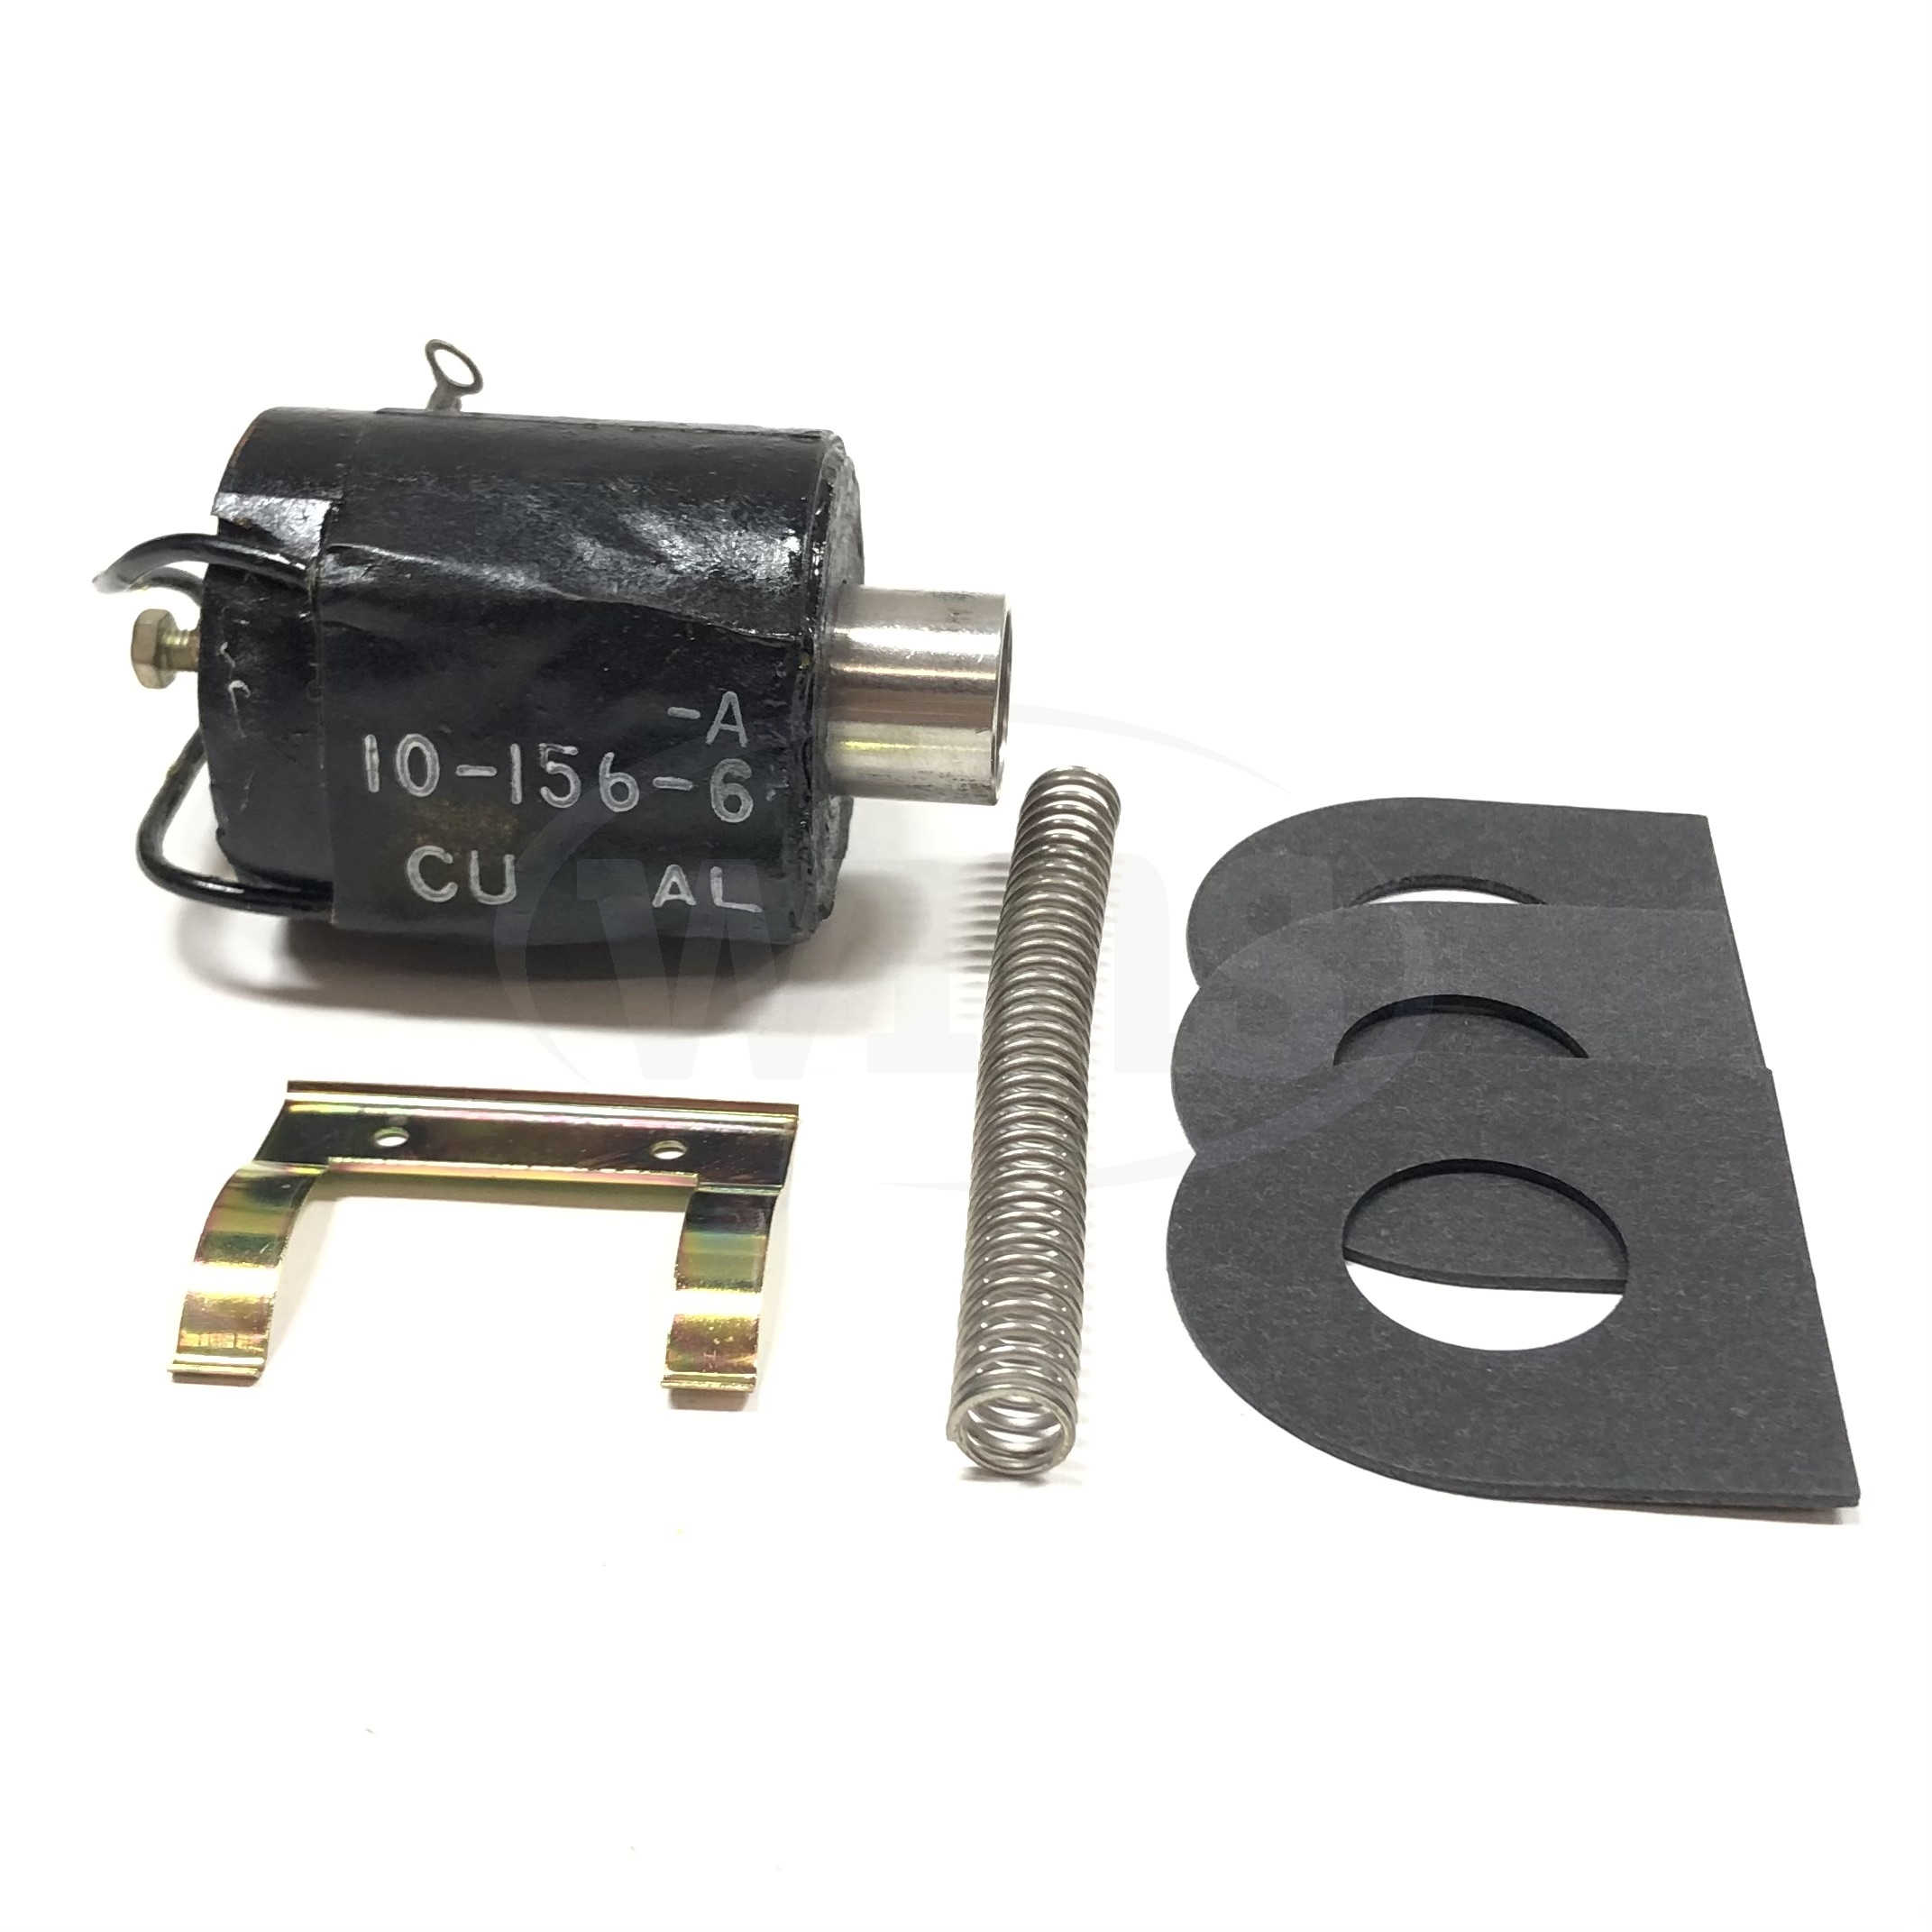 10-156-6 Asco Control Spare Parts Kit 1